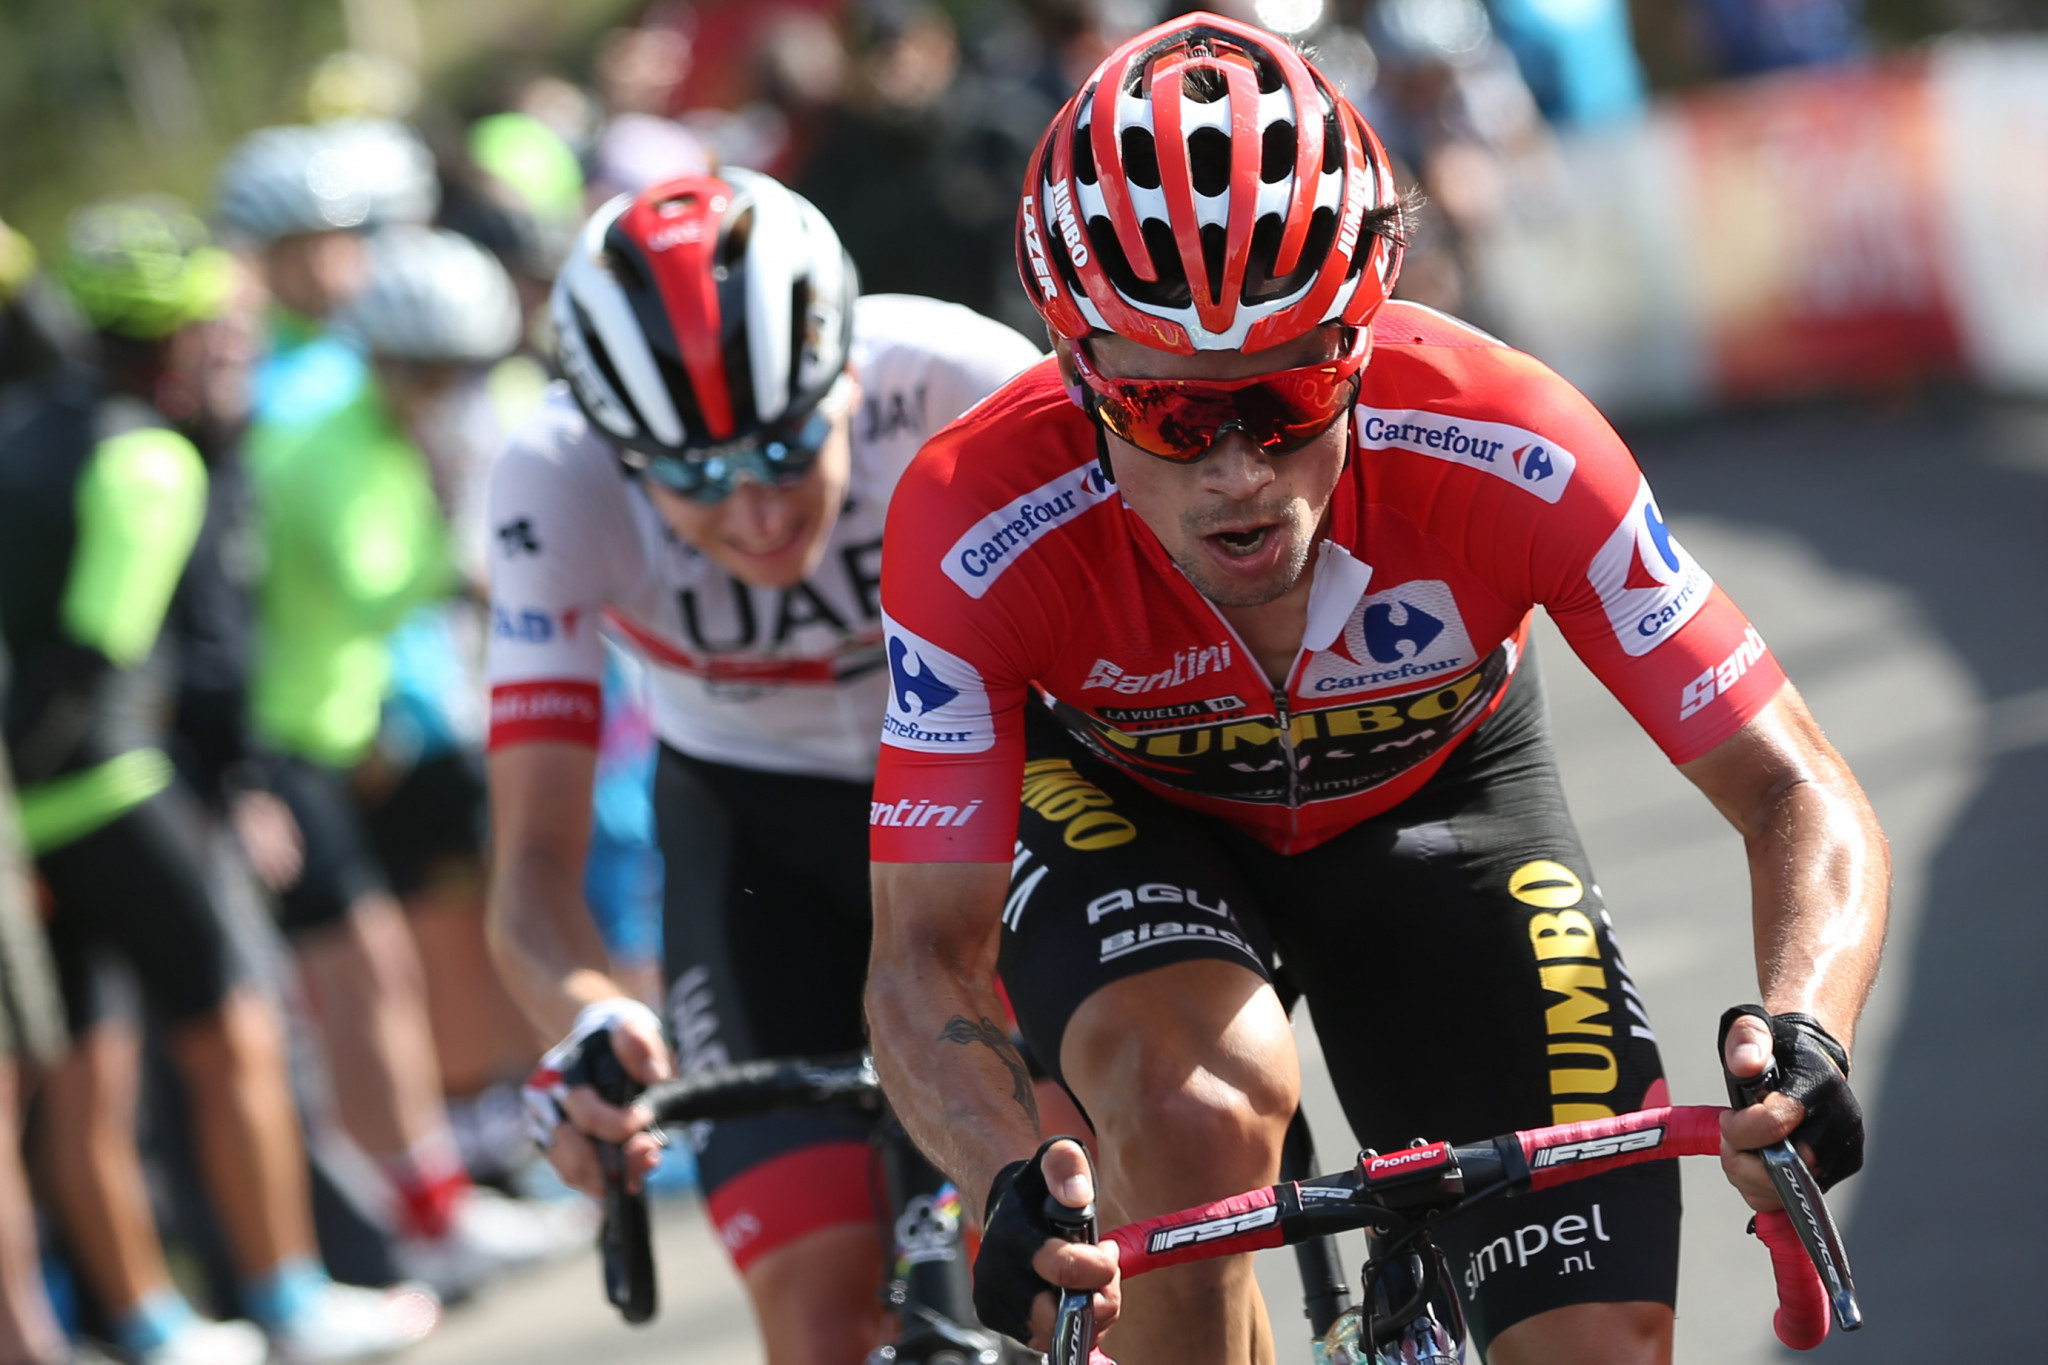 Roglič tightens grip on Vuelta a España by extending overall lead